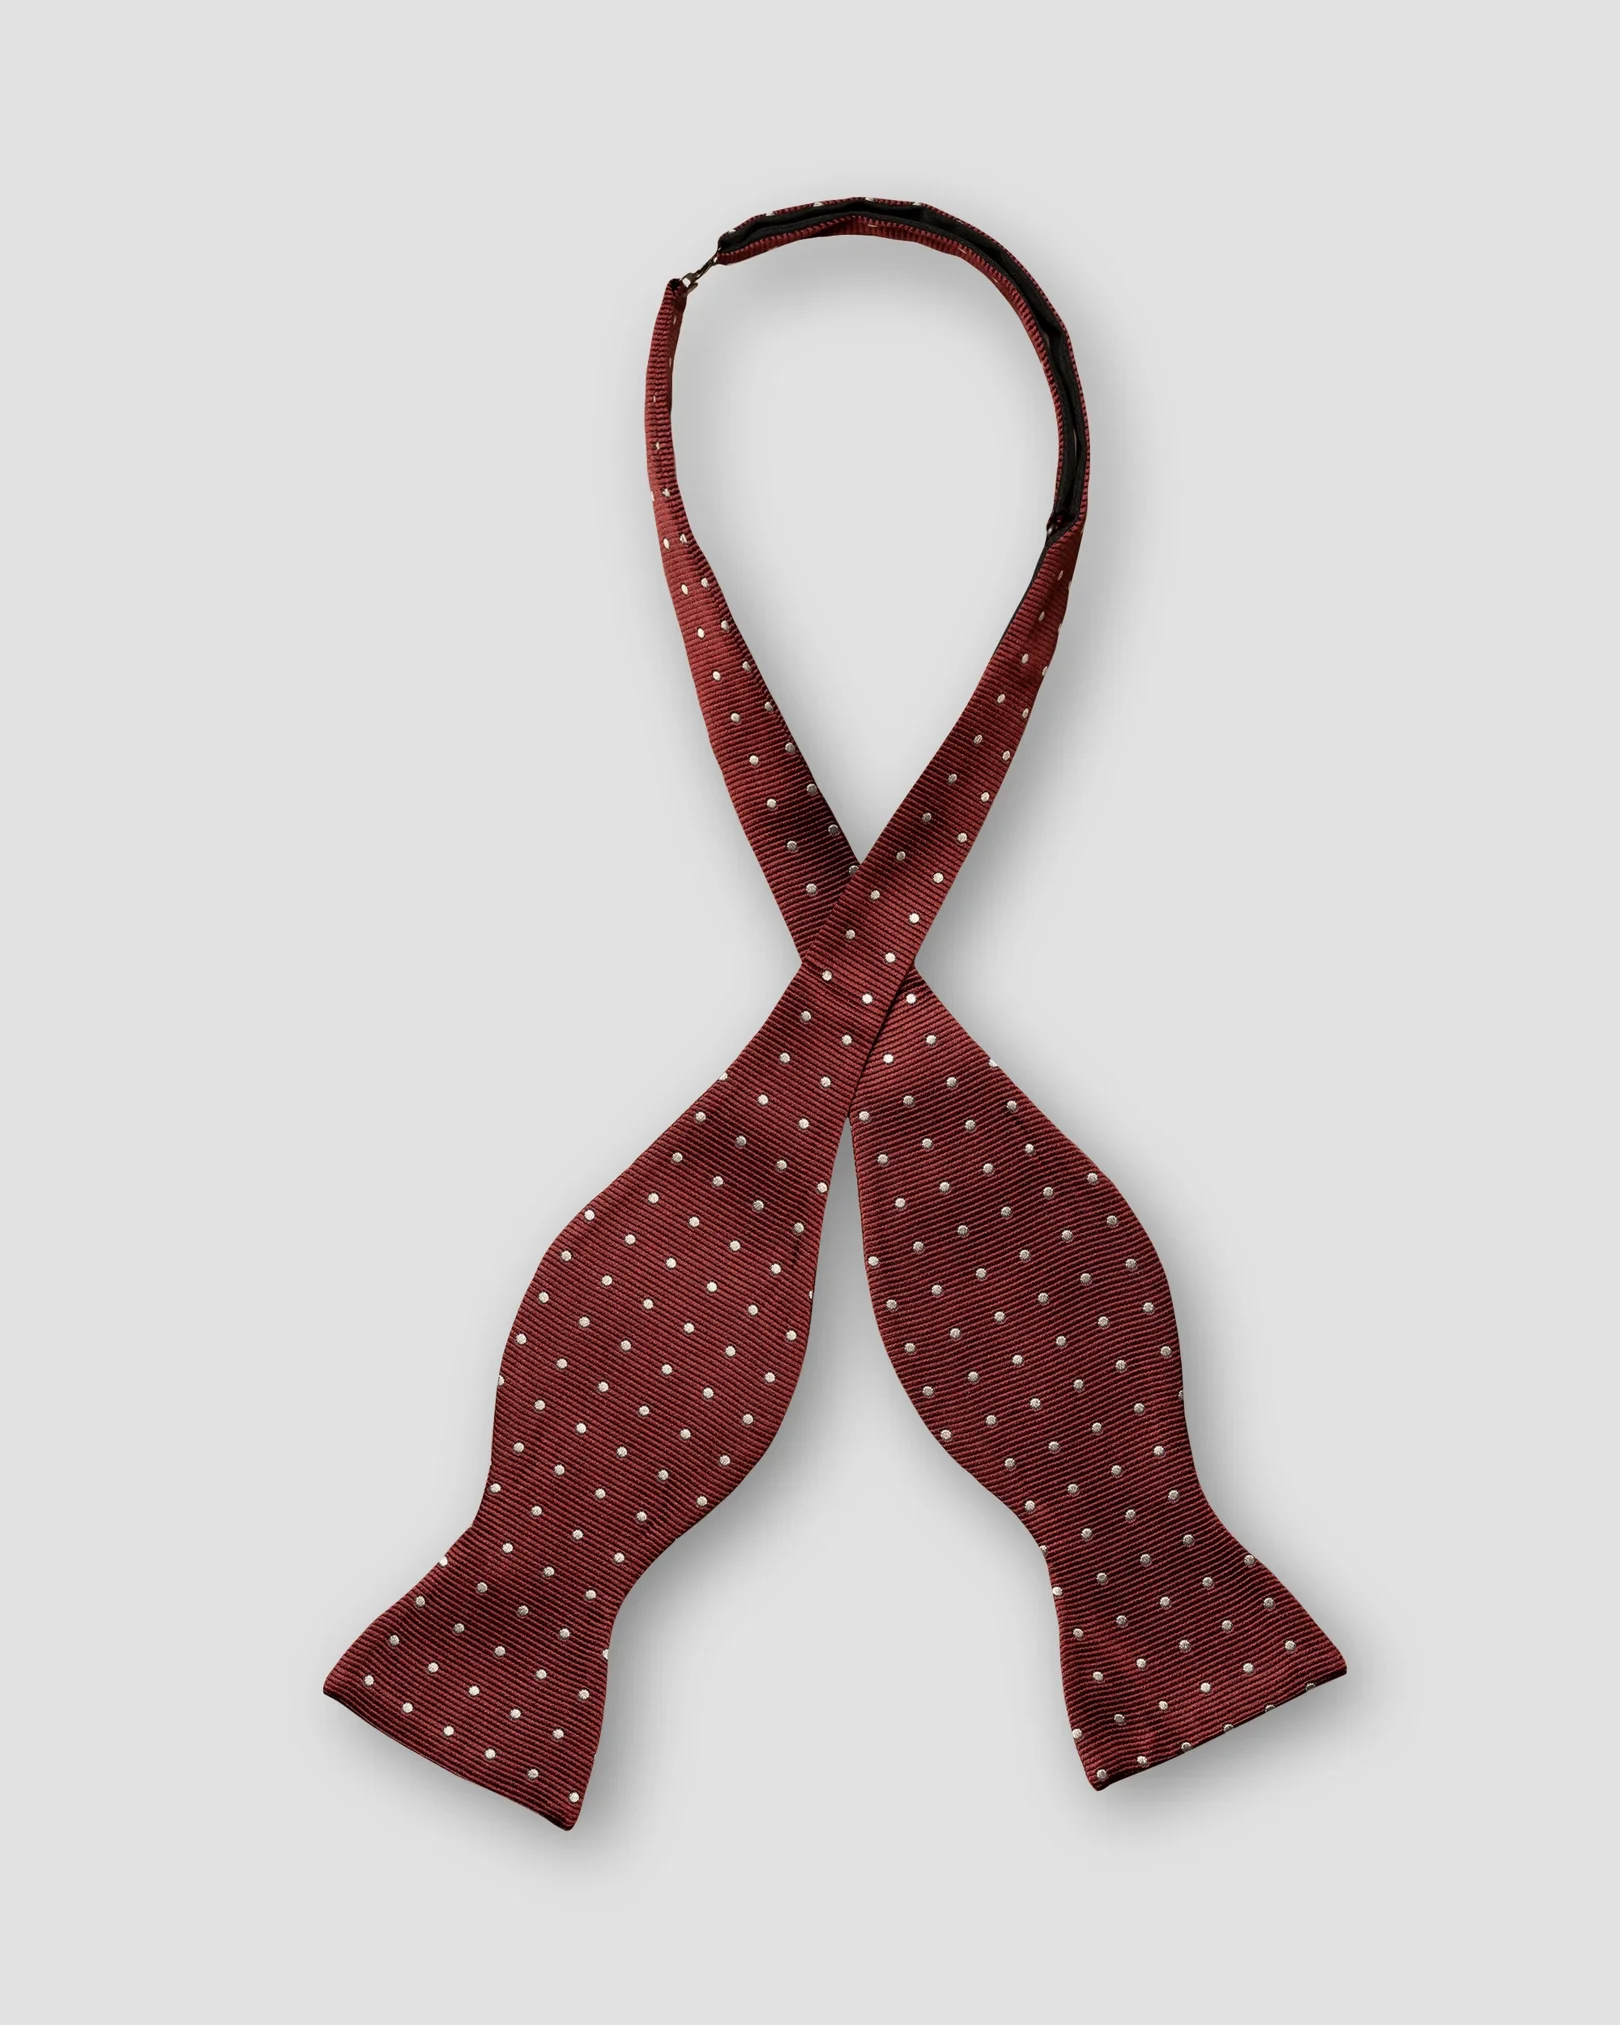 Eton - dark red bow tie self tied